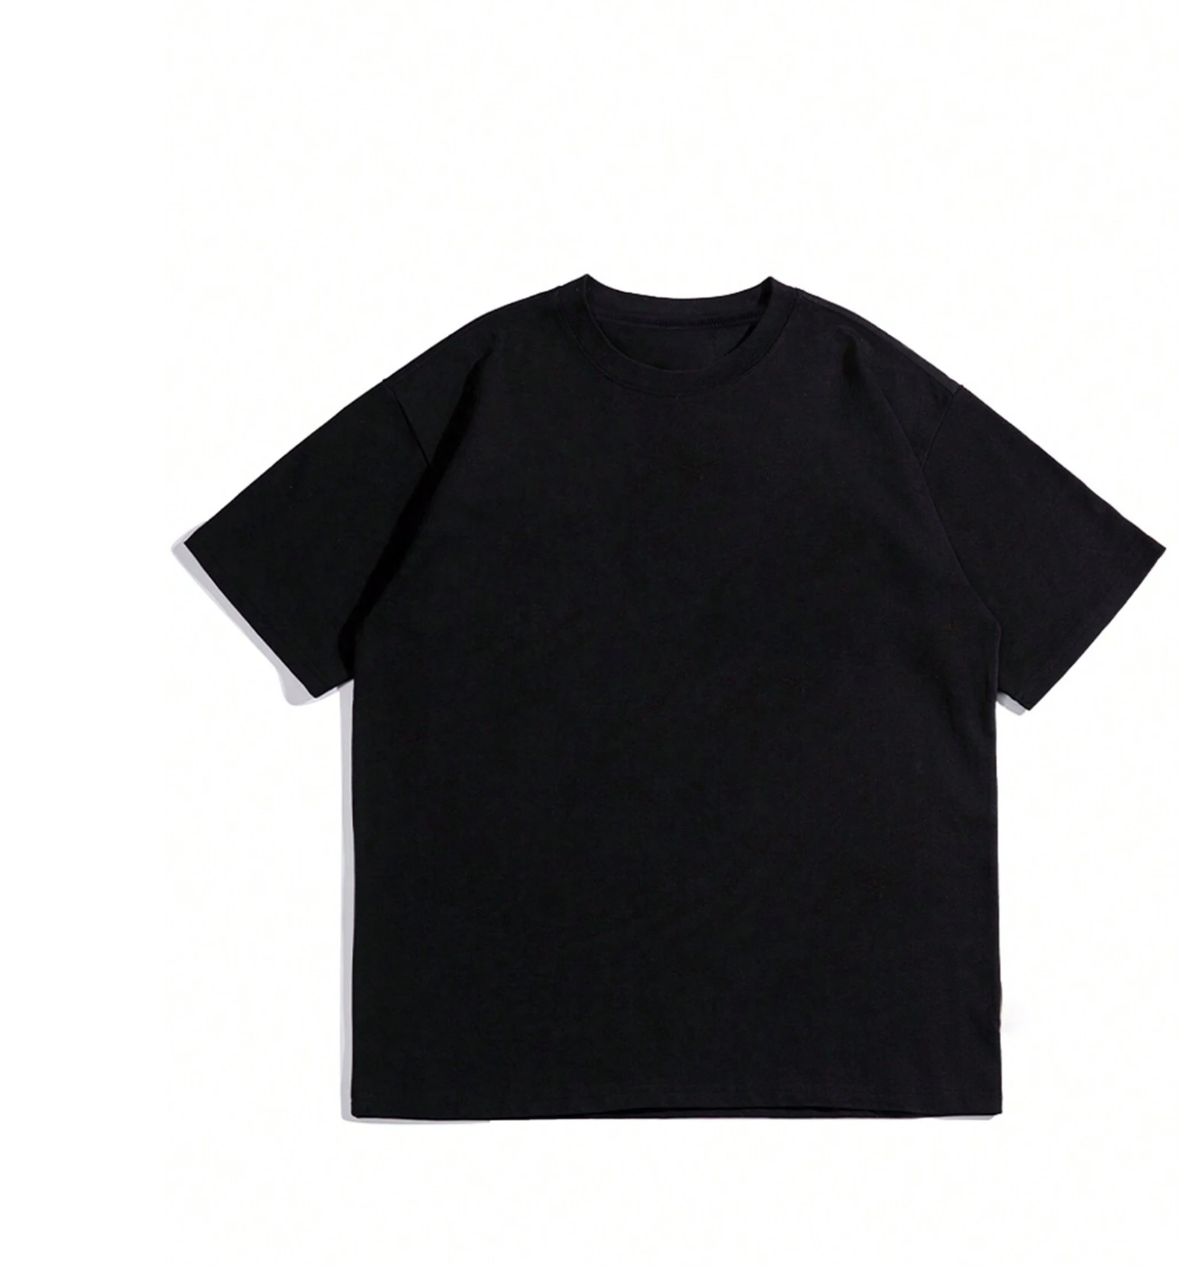 Bold & Comfortable: Colorful Letter Print Loose Fit T-Shirt for Plus Size Men!